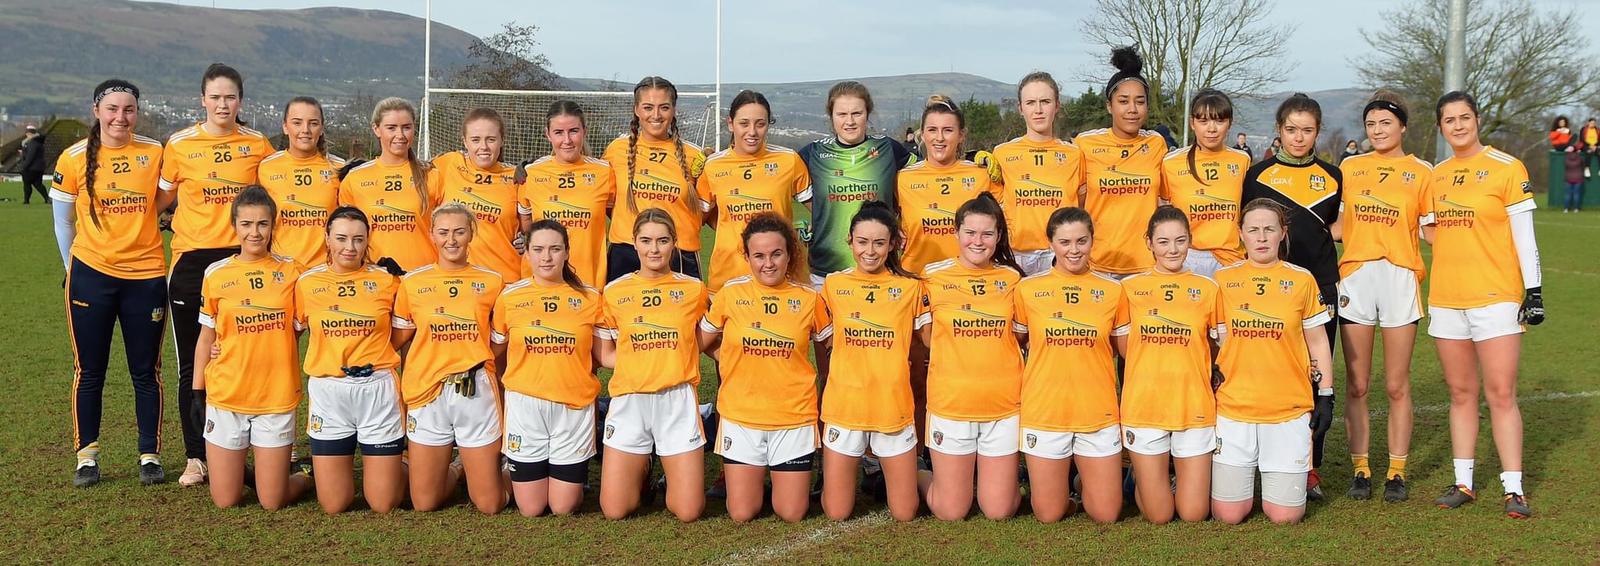 The Antrim ladies team face Limerick in Clane tomorrow